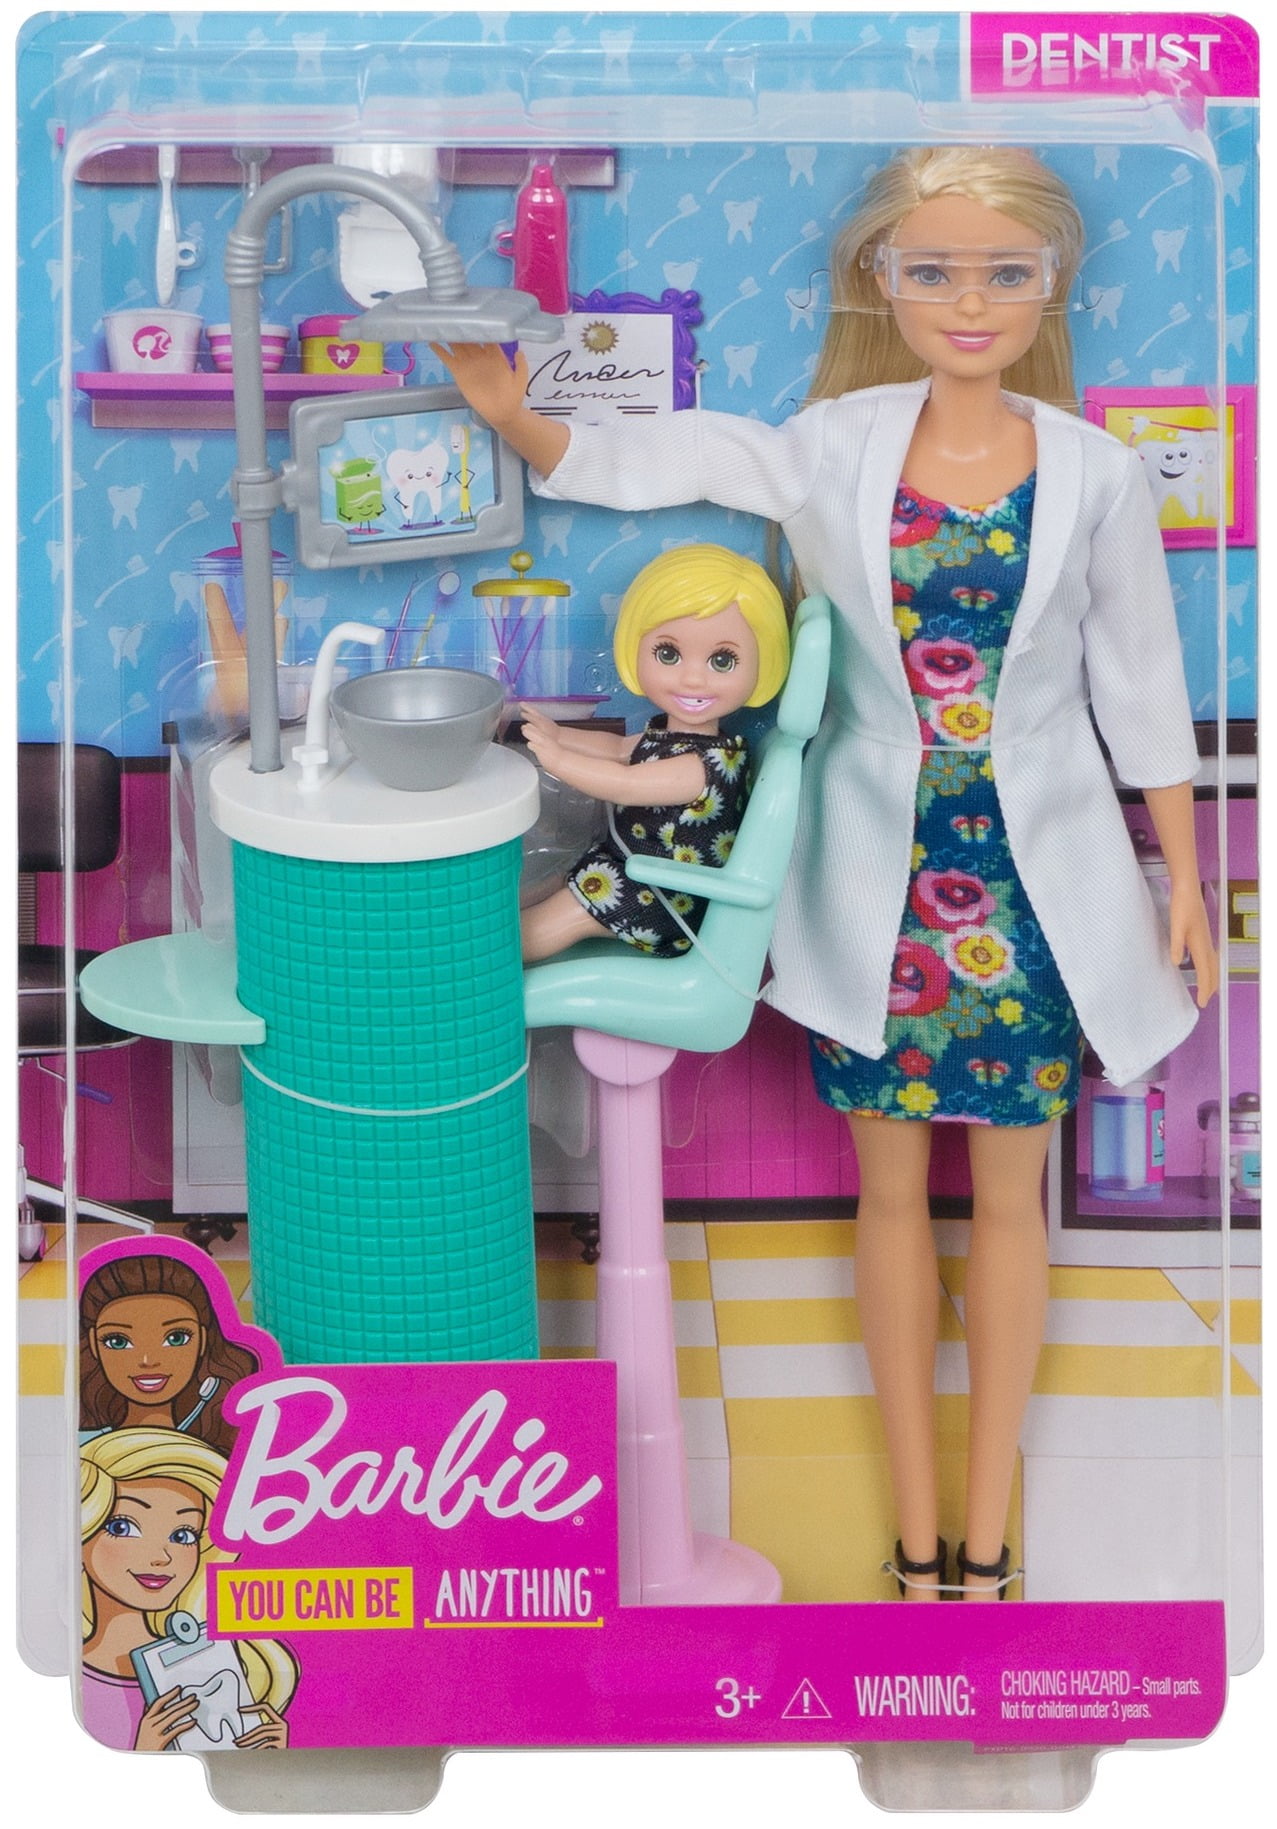 Barbie Careers Dentist Doll & Patient Doll Playset, Blonde Walmart.com